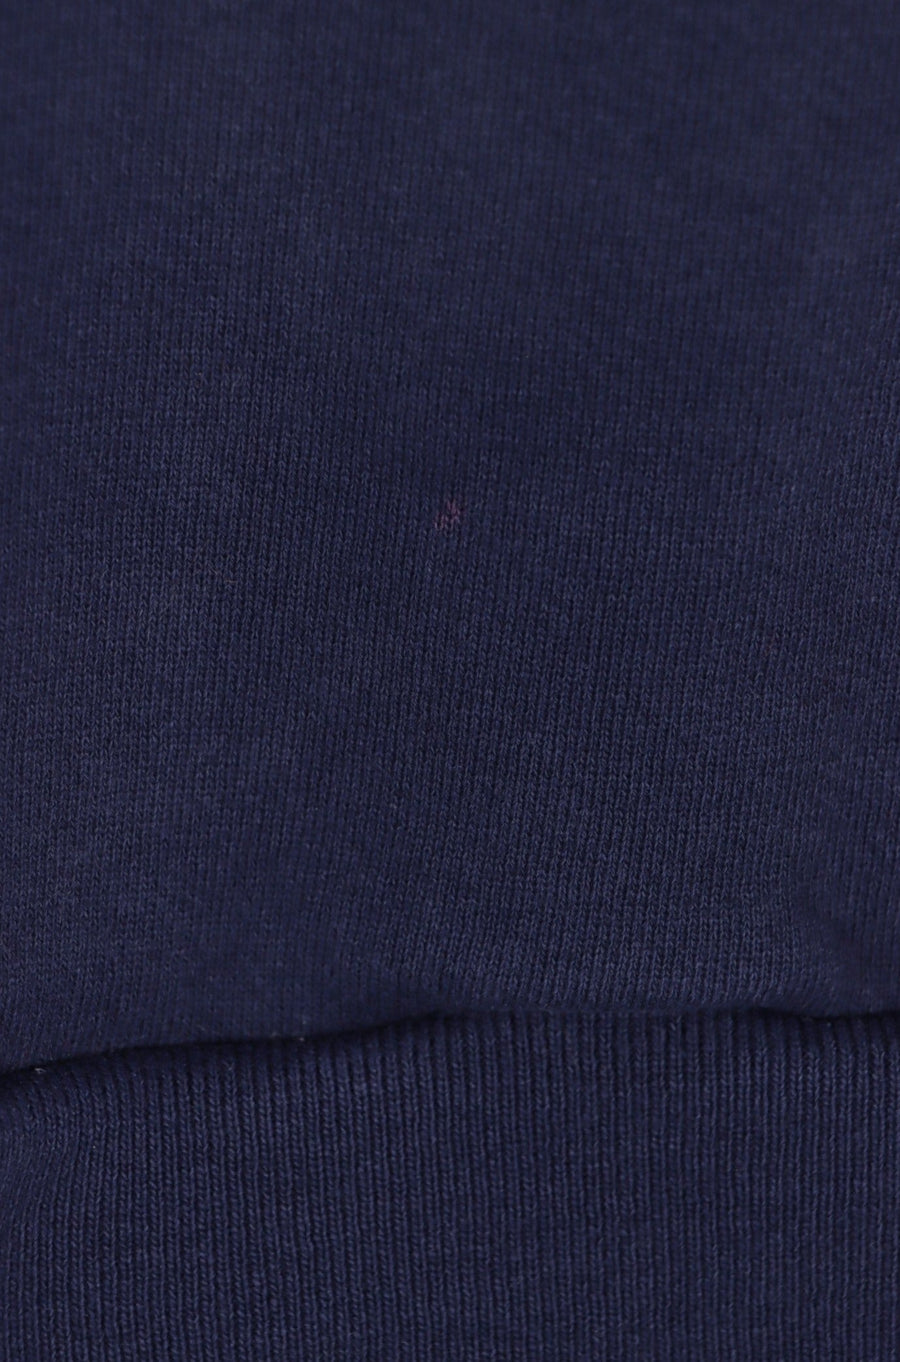 Gettysburg College Spell Out JANSPORT Varsity Sweatshirt USA Made (XL)